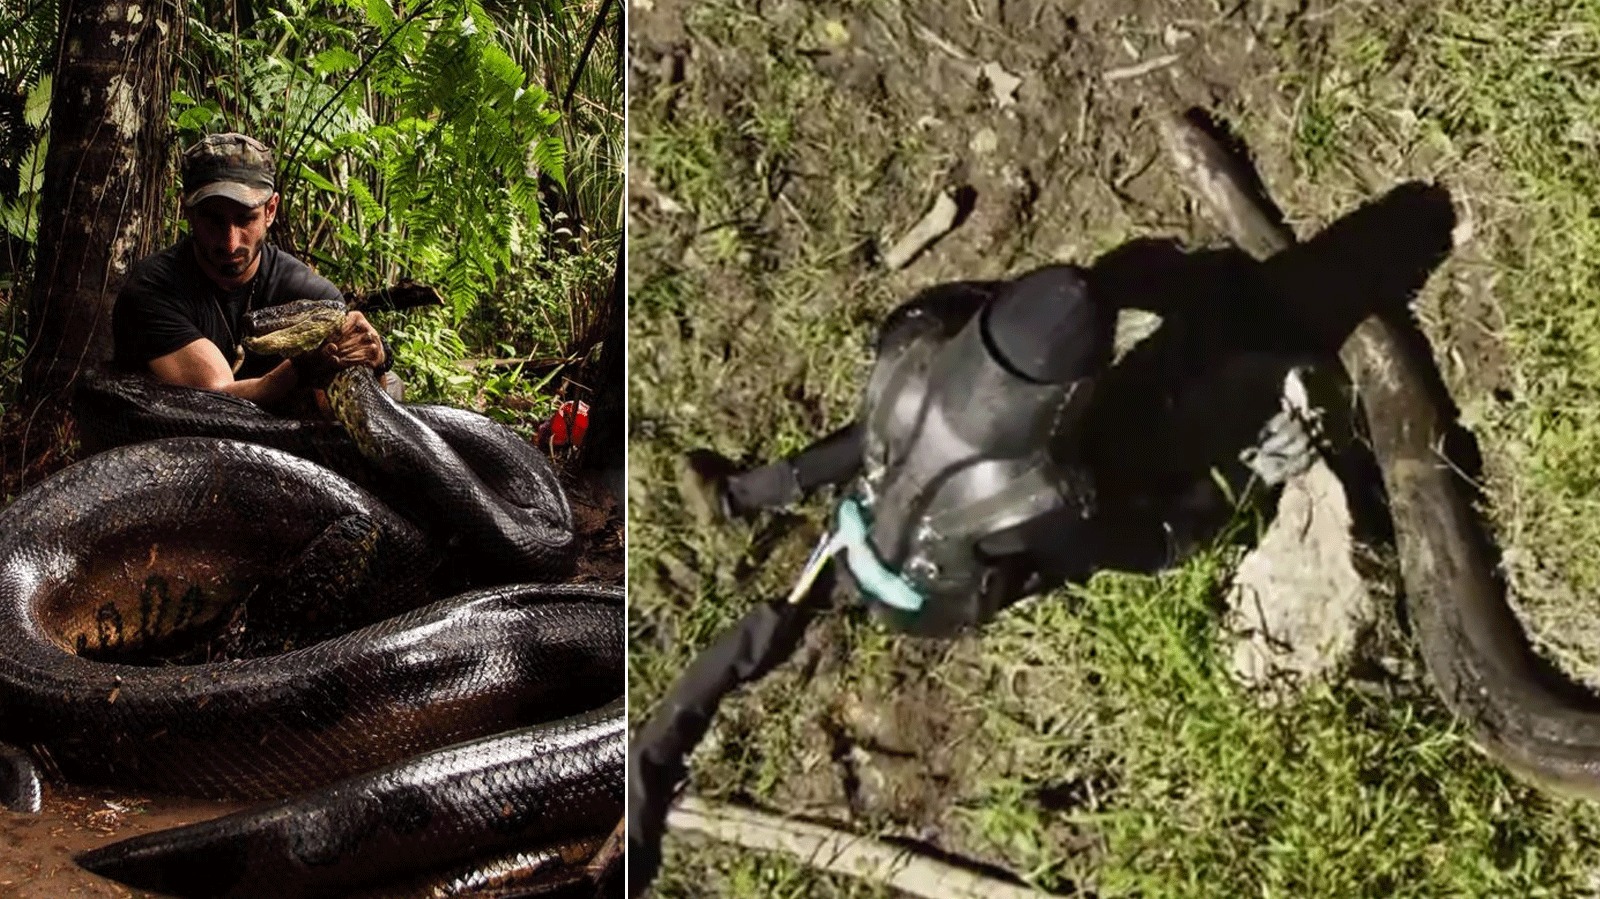 Watch eaten alive by anaconda